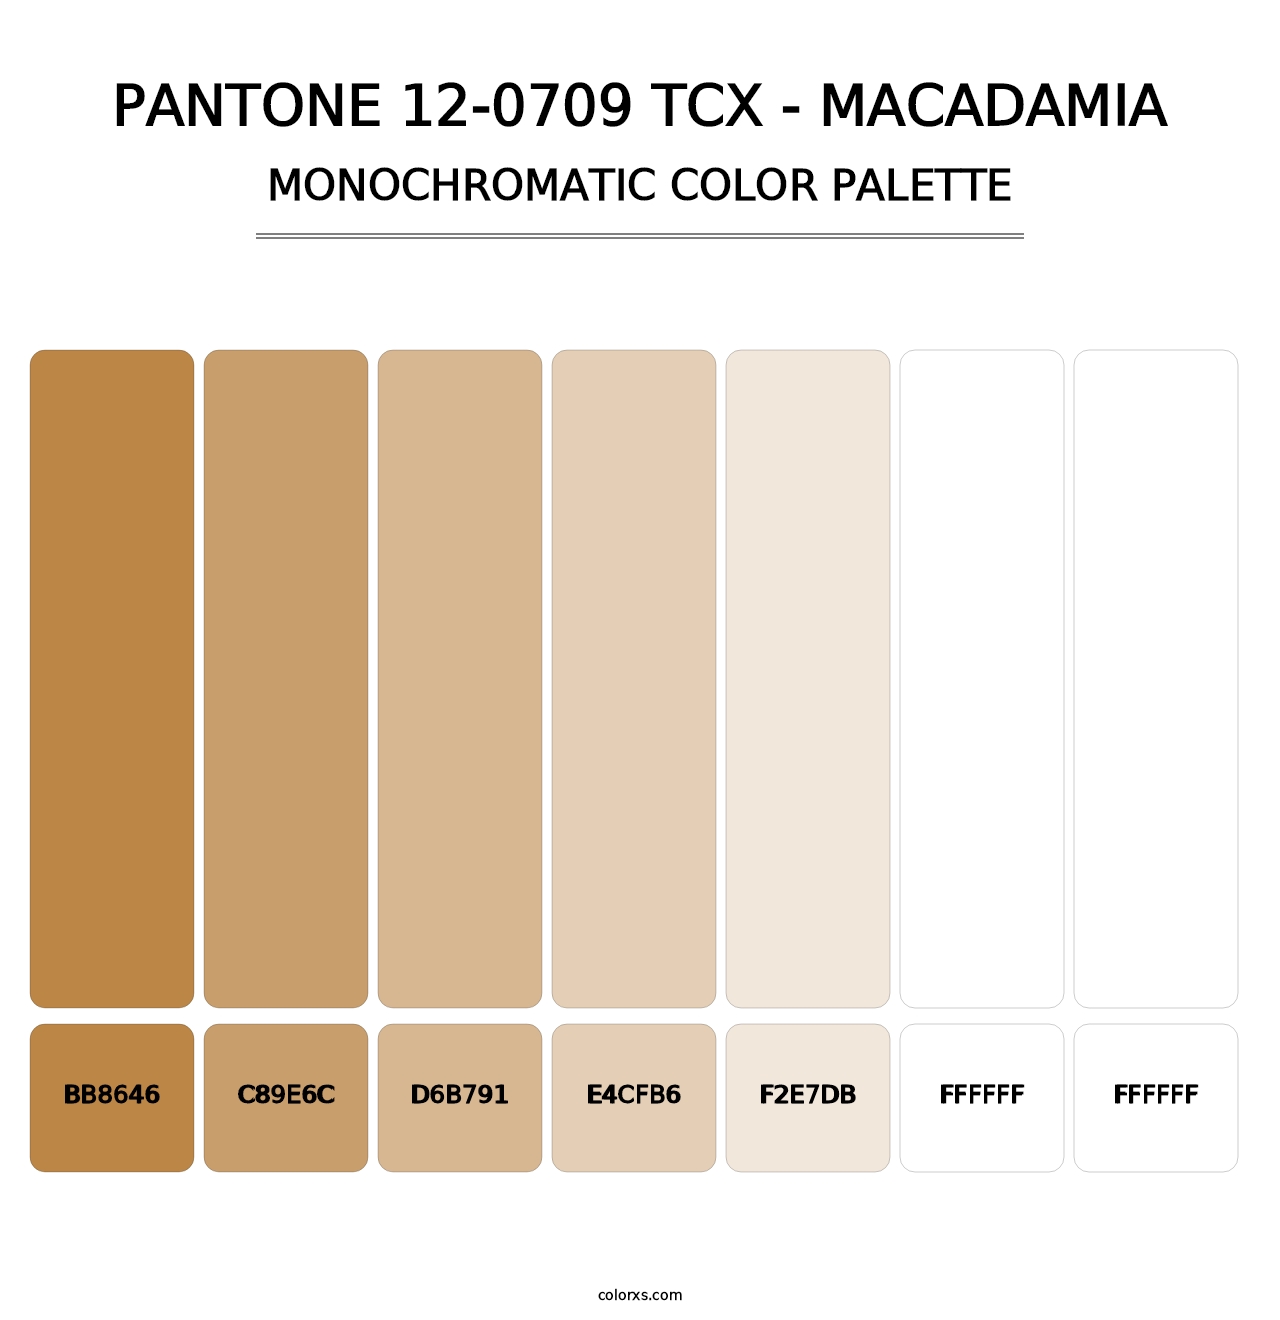 PANTONE 12-0709 TCX - Macadamia - Monochromatic Color Palette